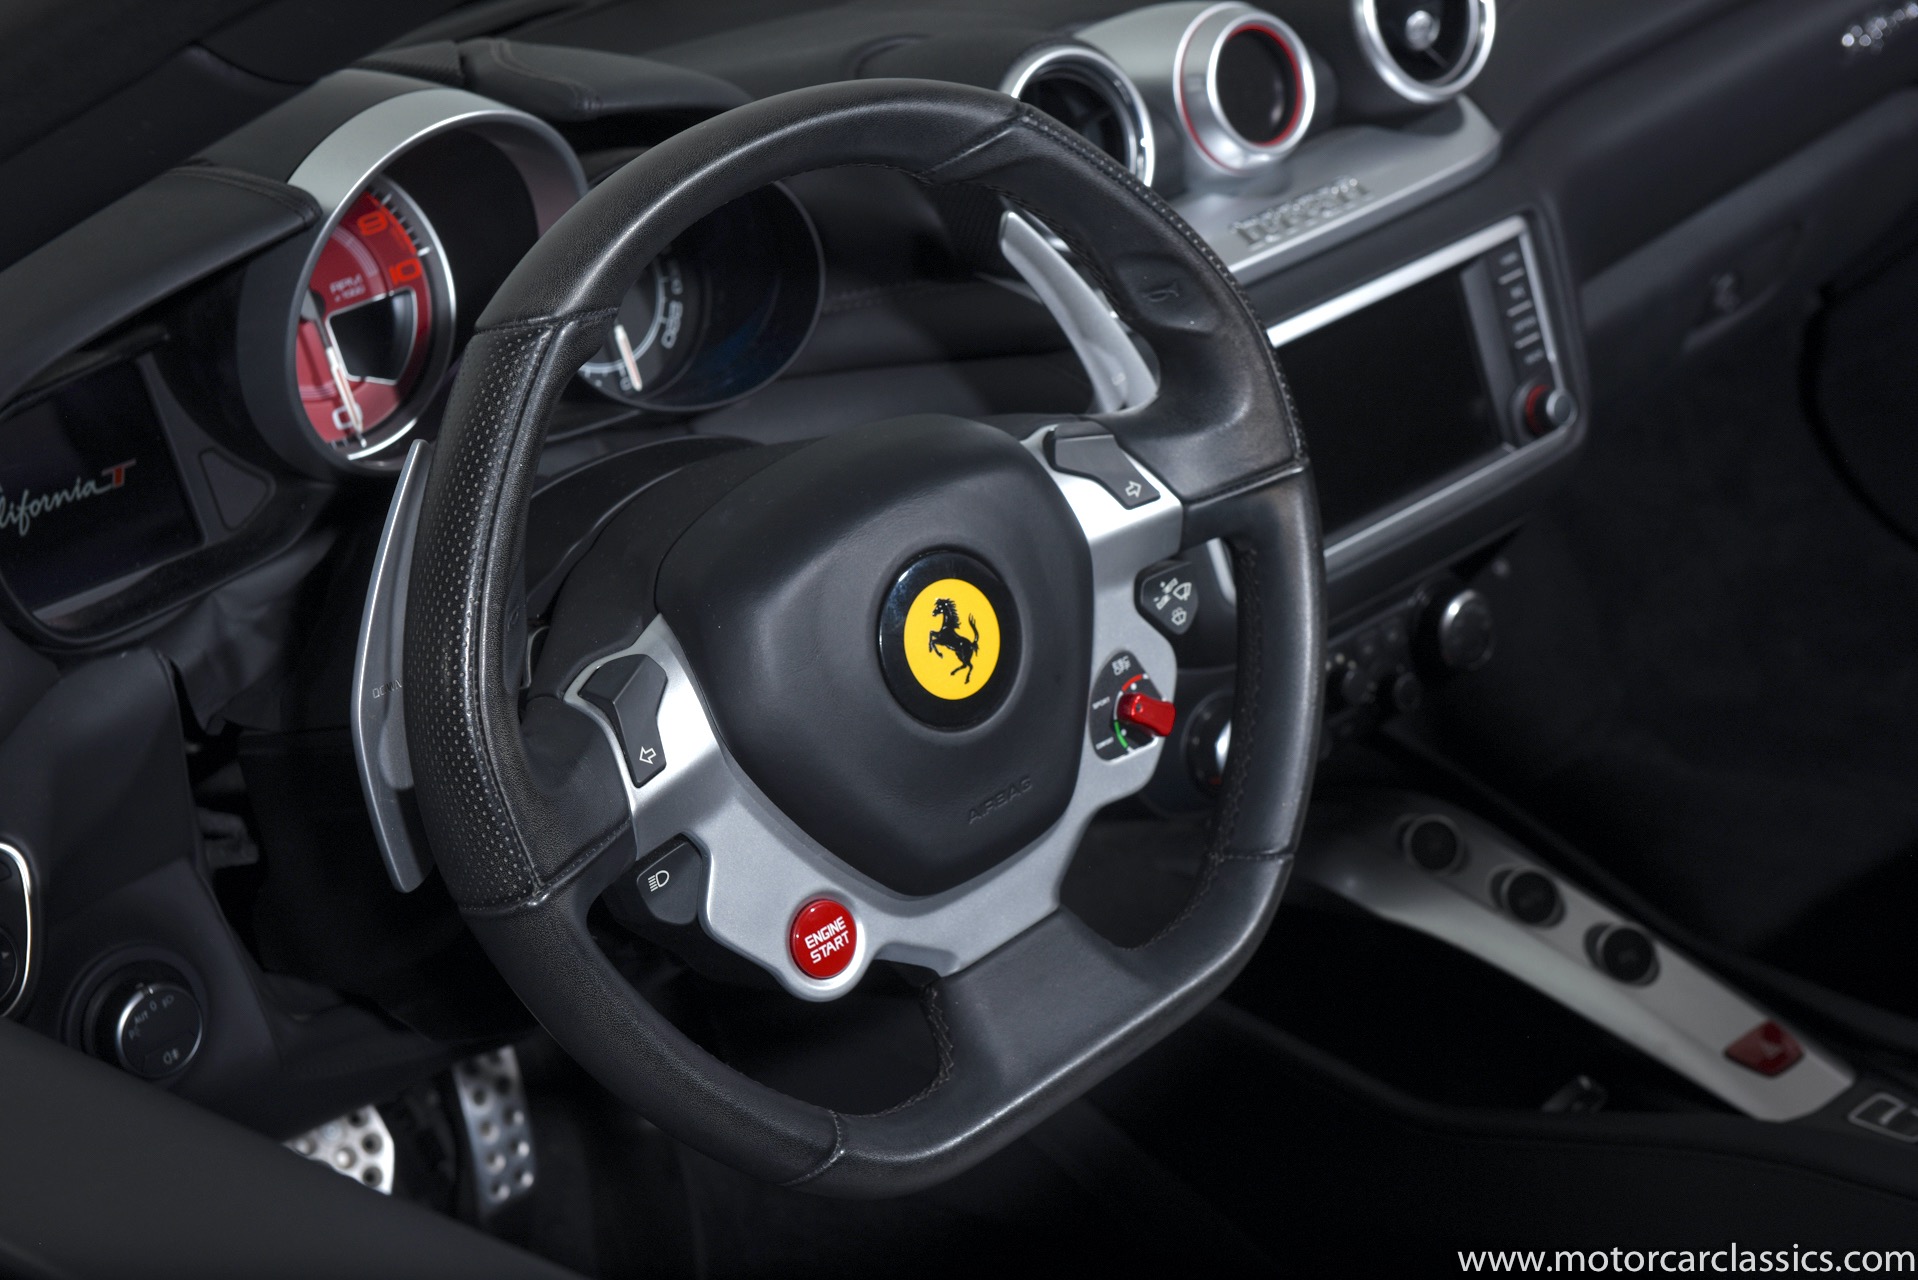 2016 Ferrari California T 